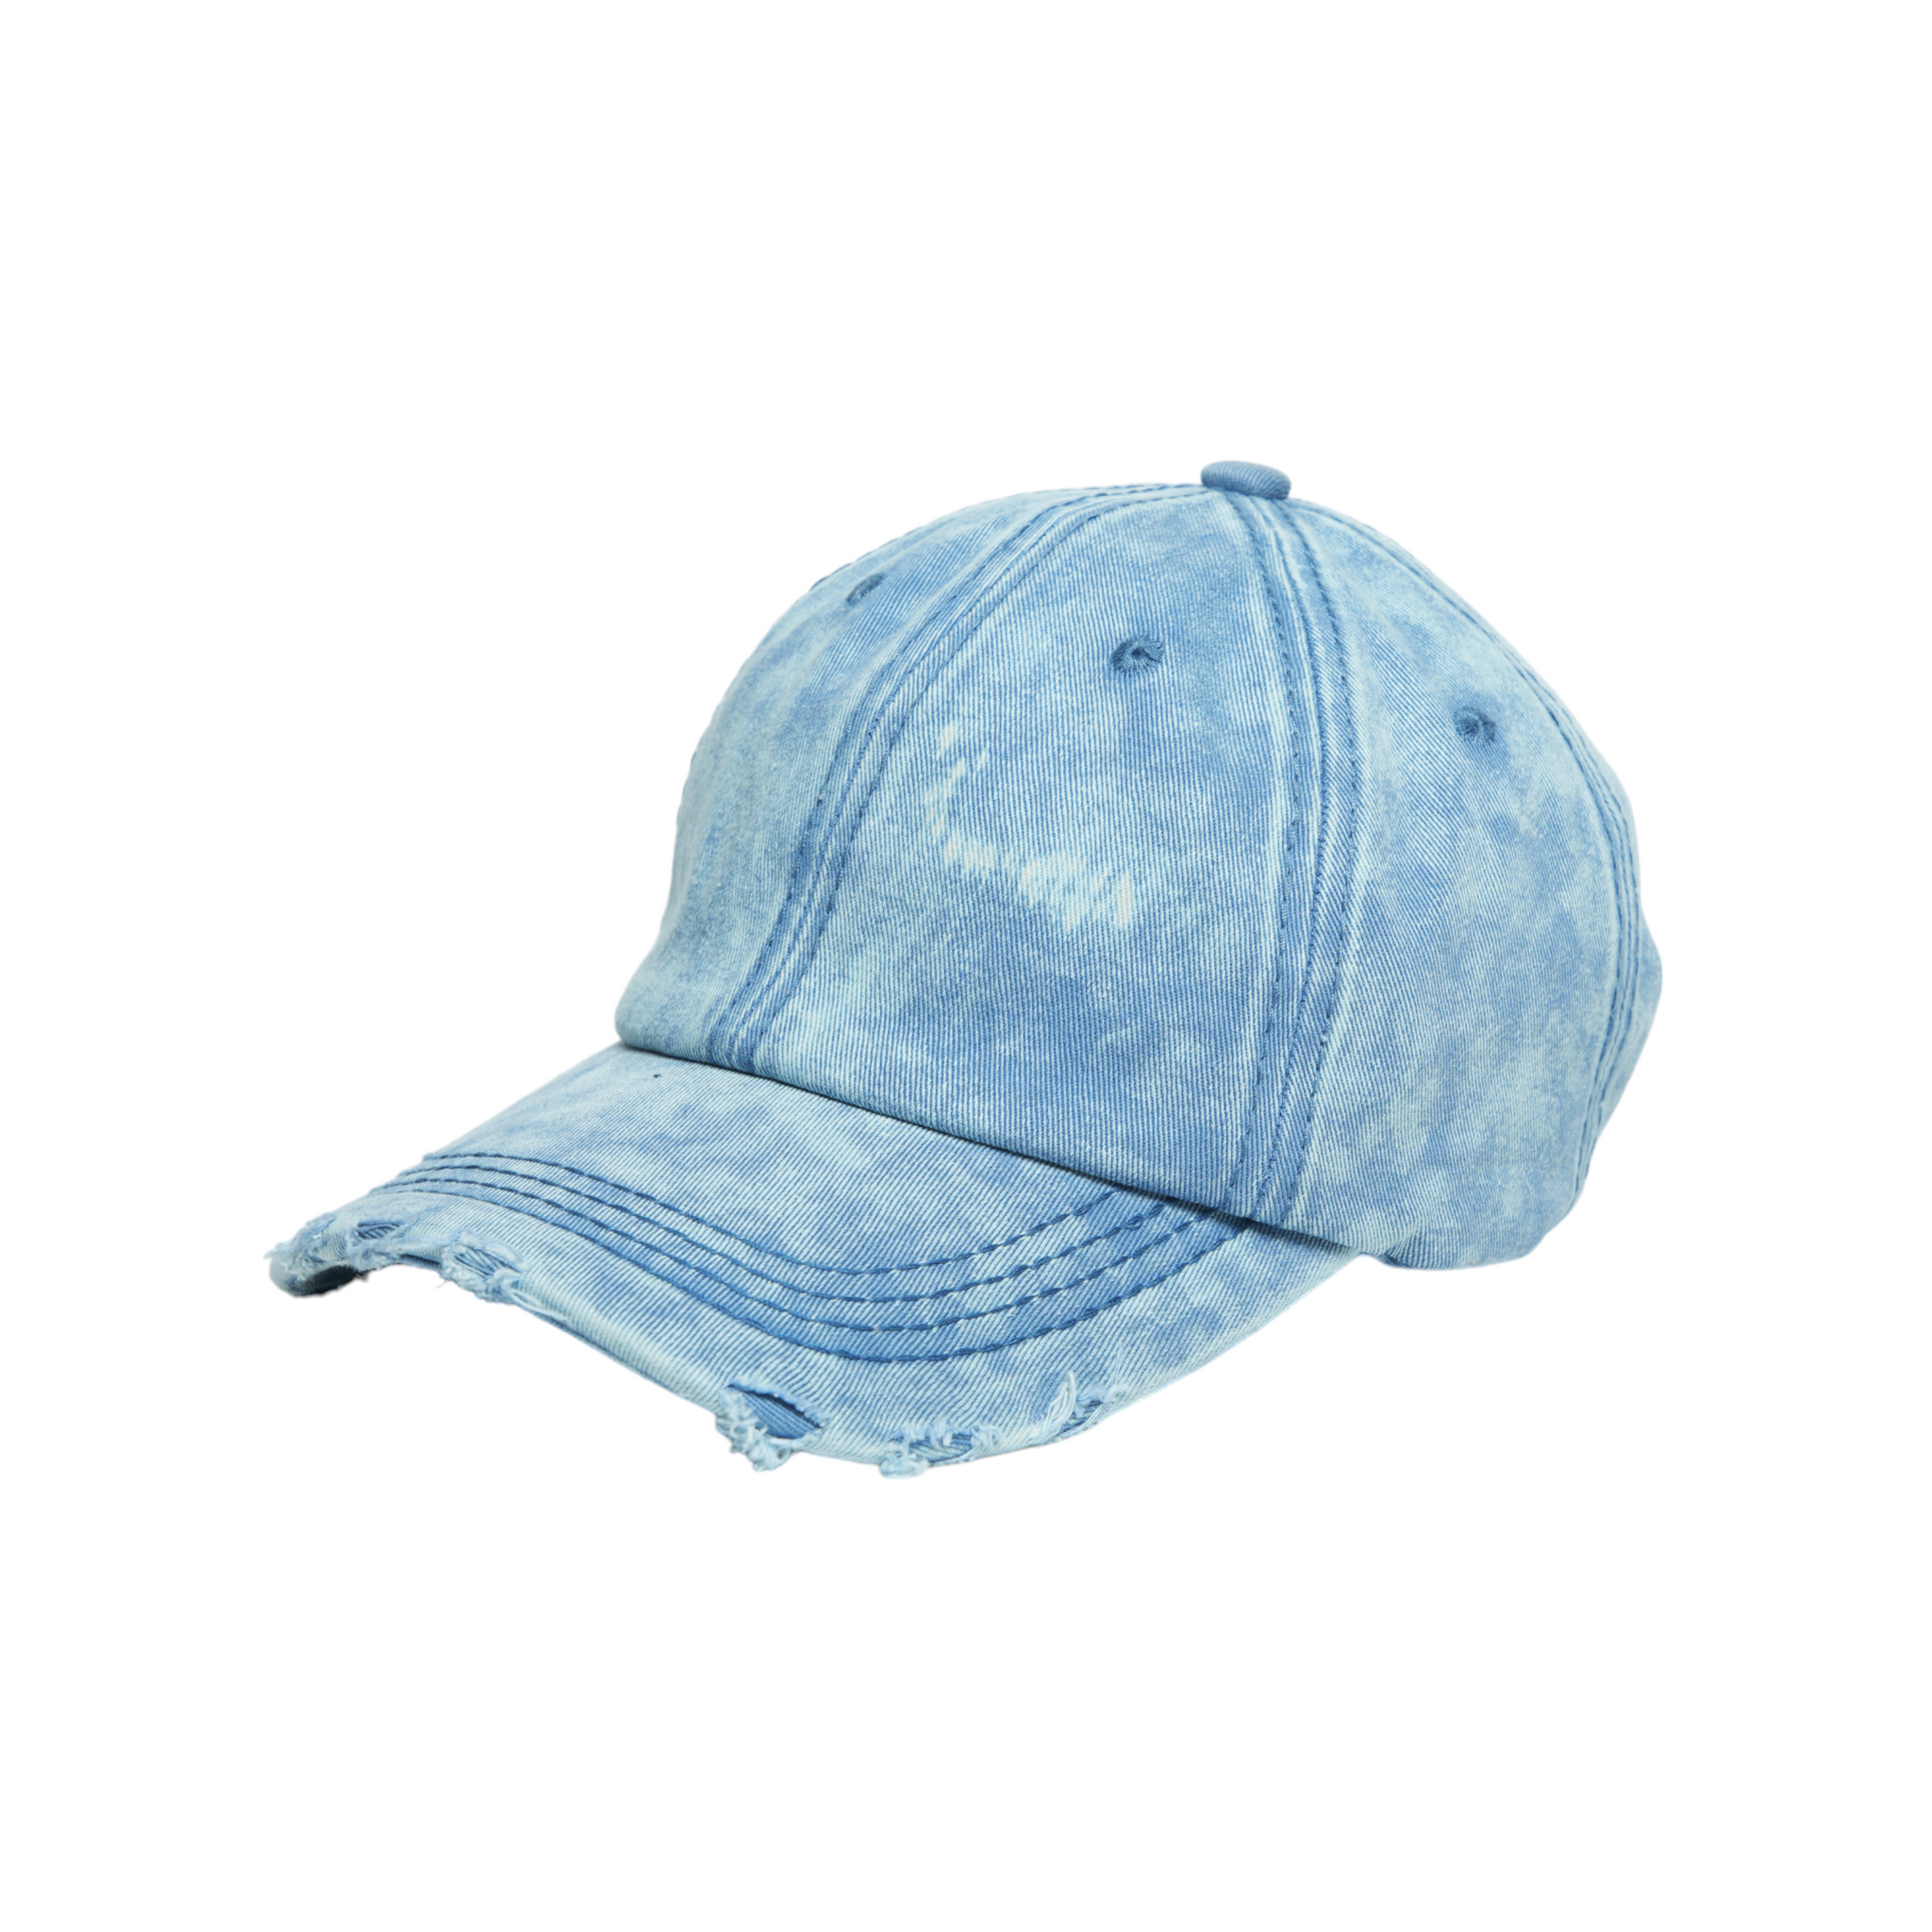 Chokore Distressed Denim Baseball Cap (Light Blue)